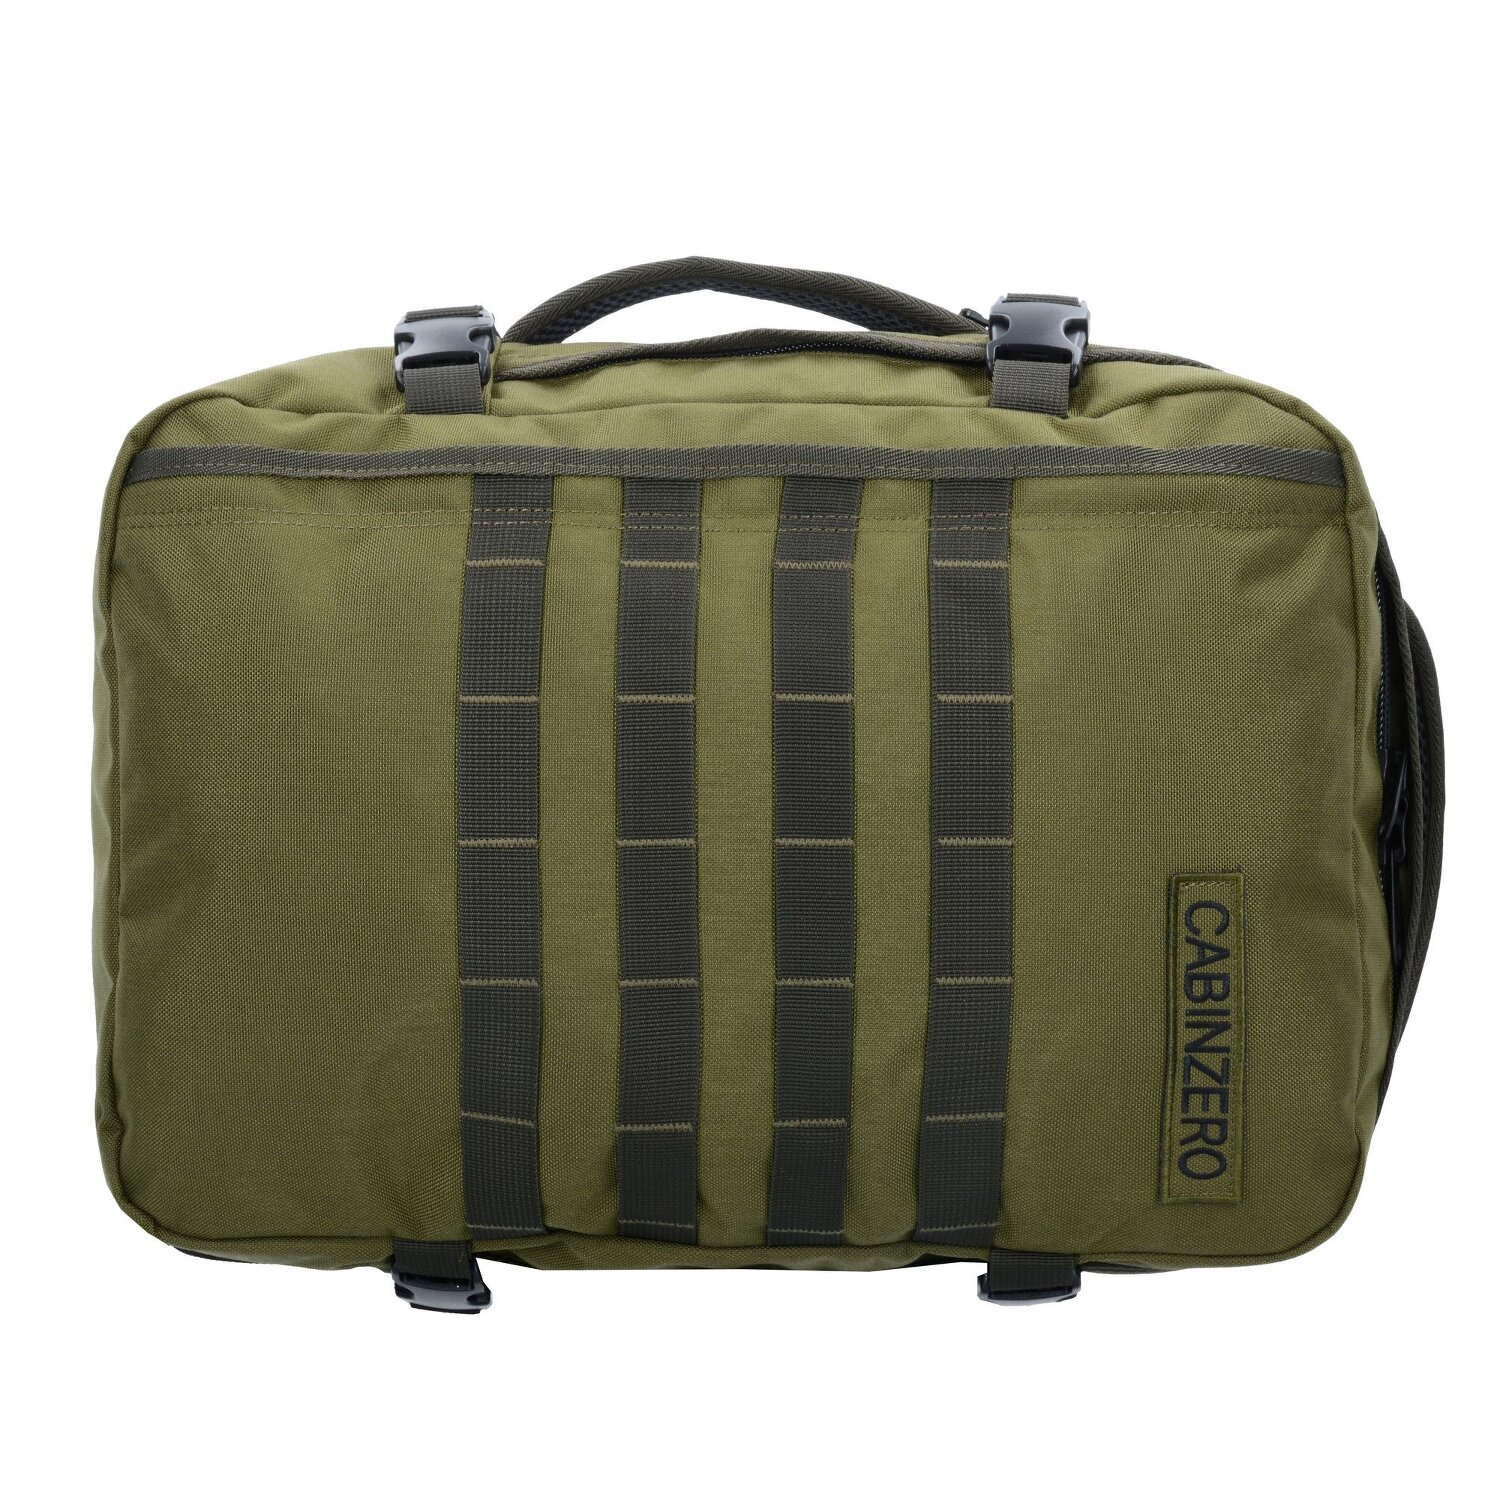 Mochila Cabin Zero 28 L. Military Tactical Backpack Green